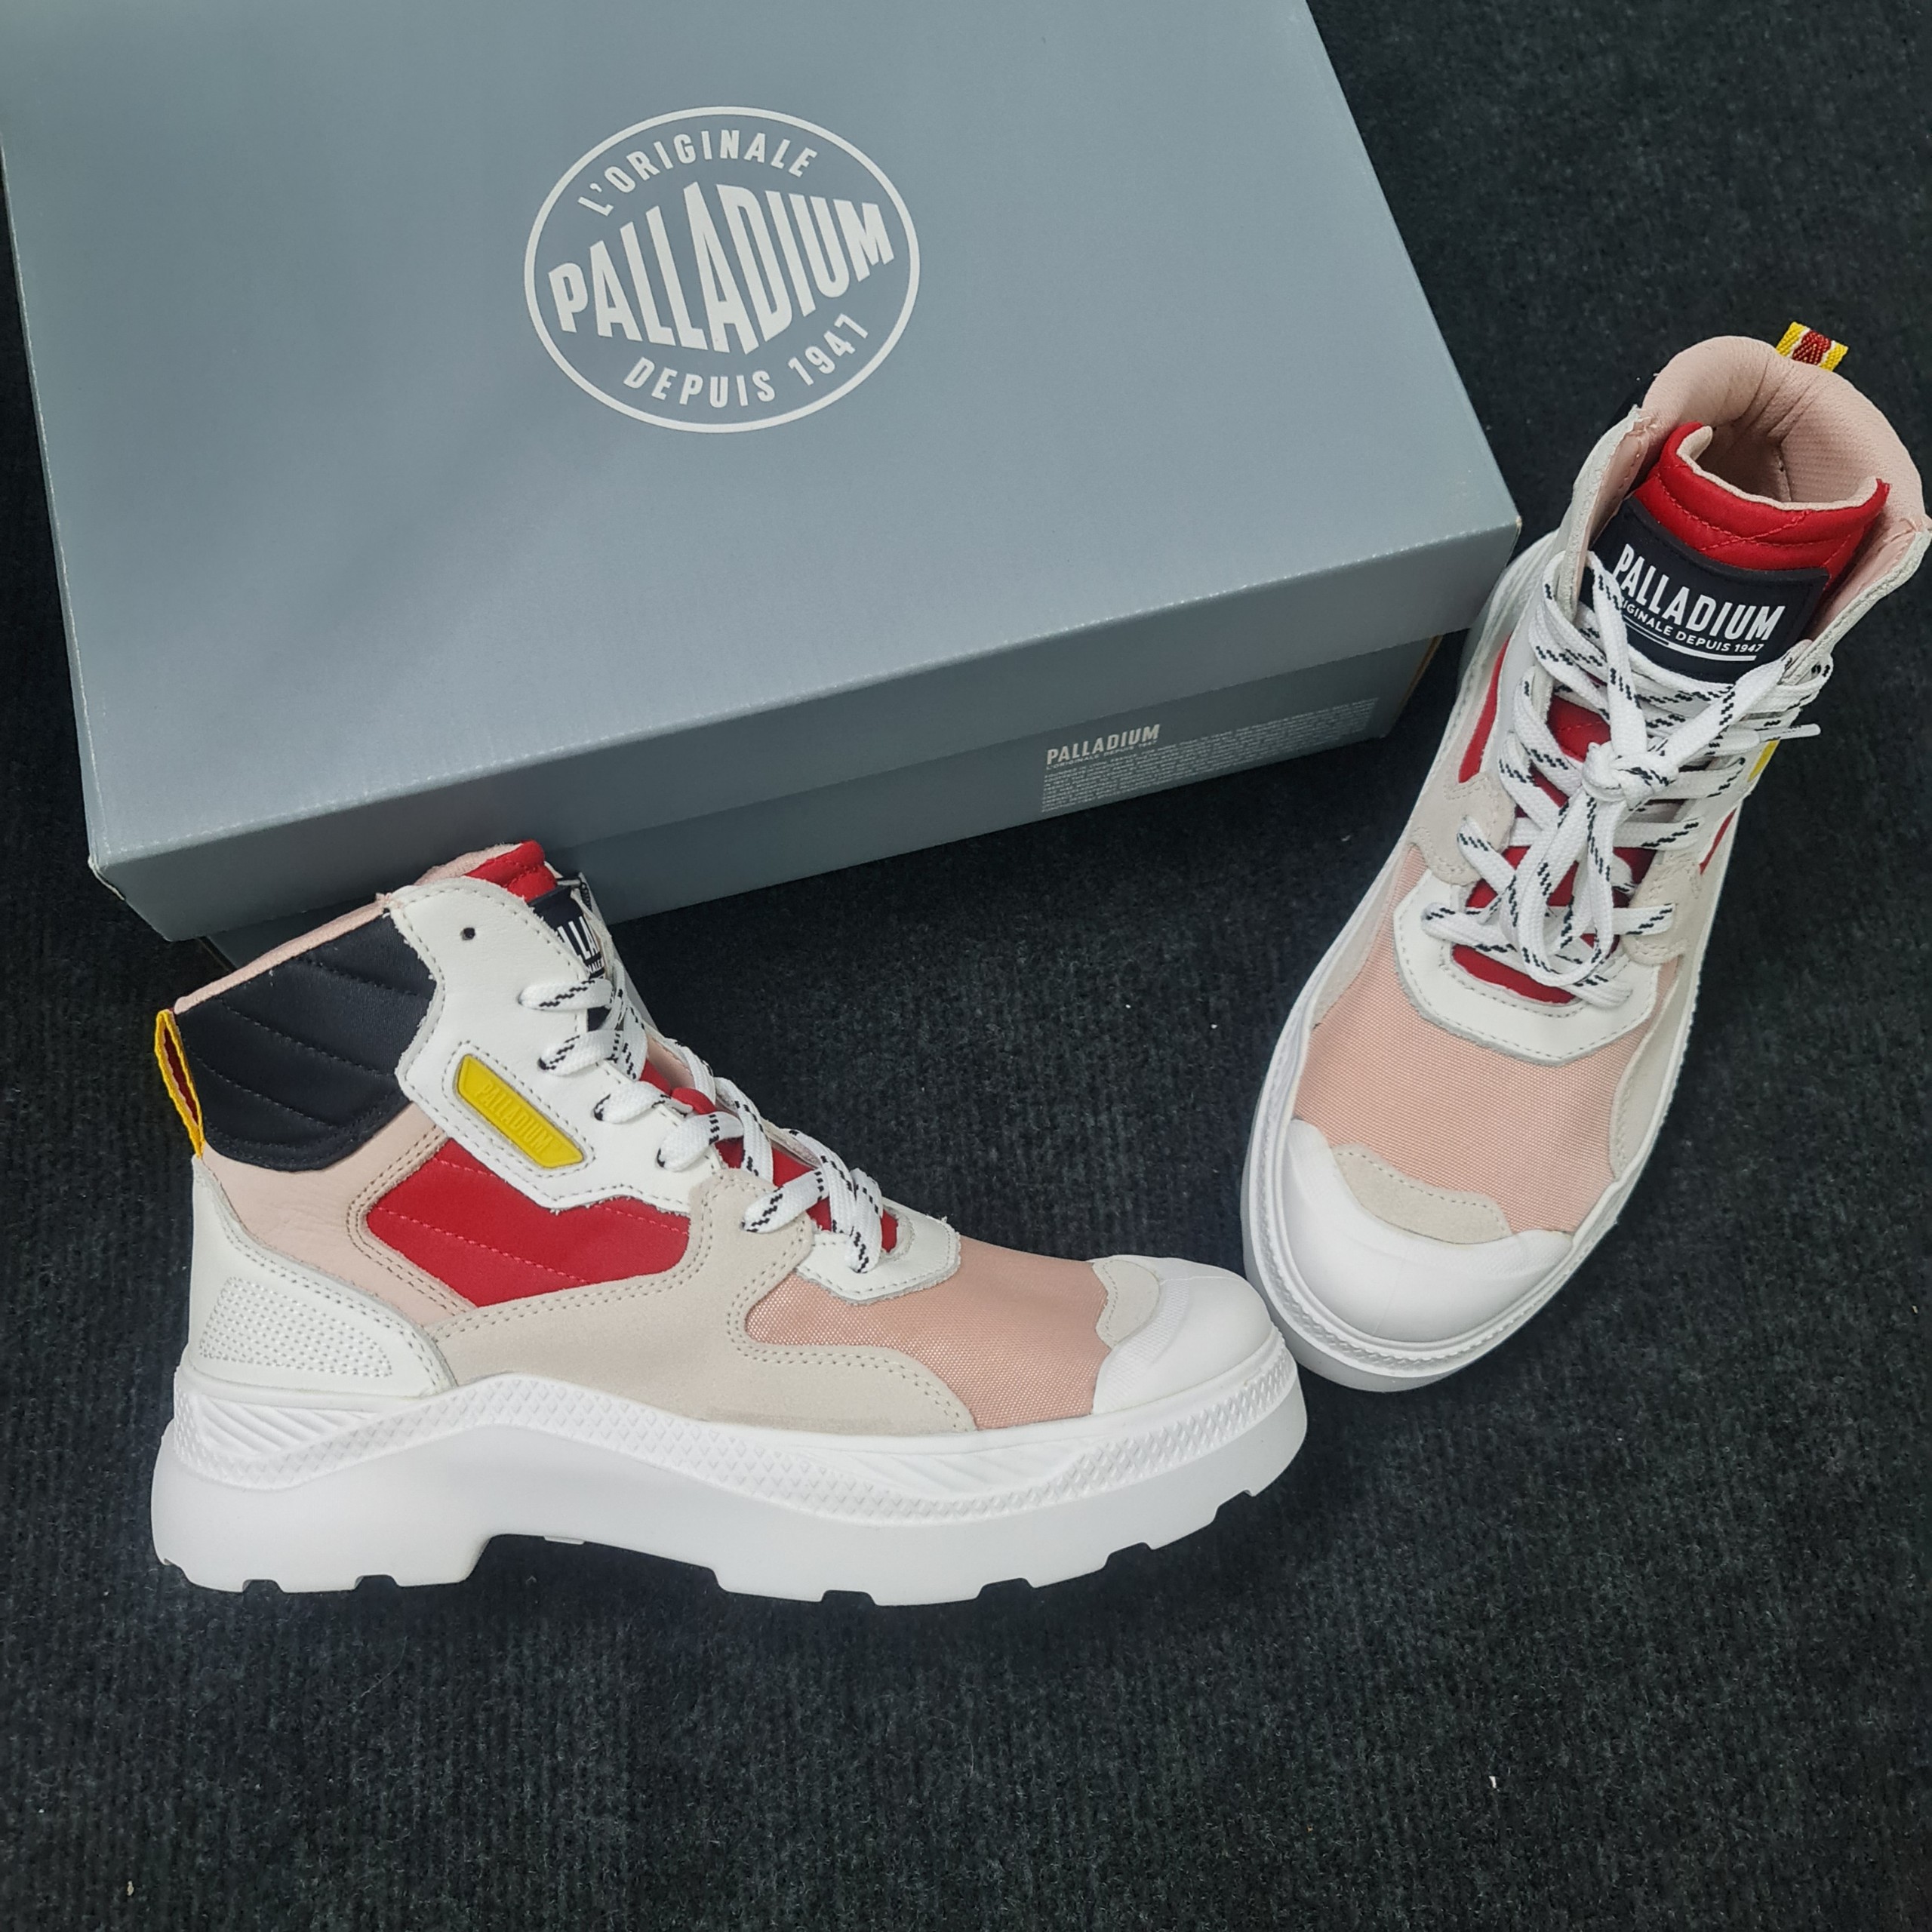 Giày Palladium Store Pallakix cổ cao da lộn kết hợp vải sneaker mẫu mới 76424-916-M